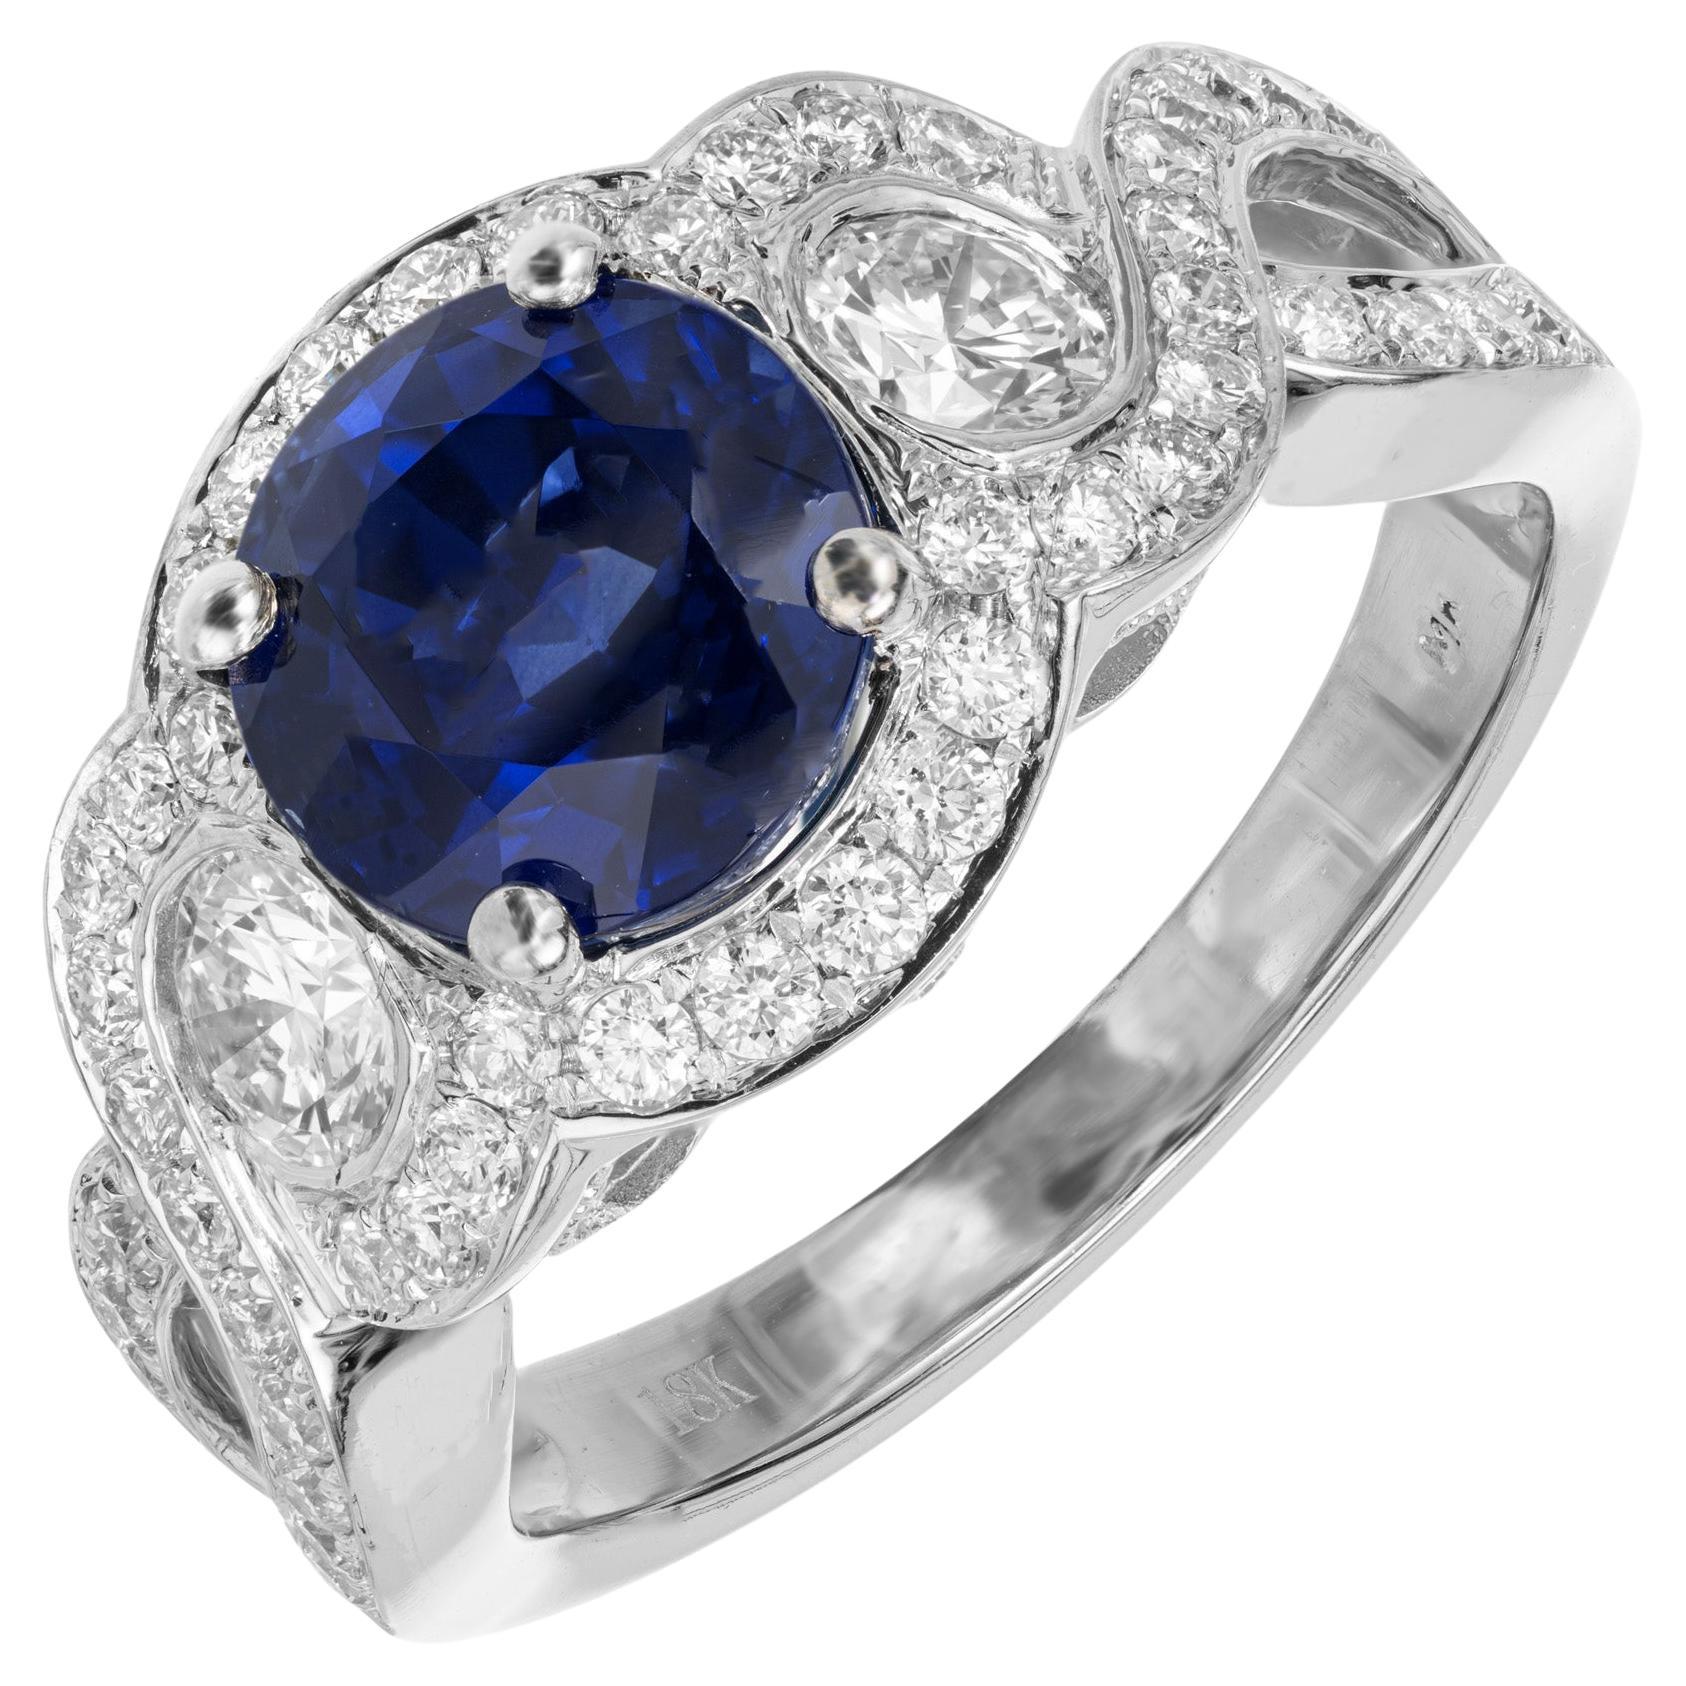 GIA Certified 2.91 Carat Round Sapphire Diamond Swirl Halo Gold Engagement Ring